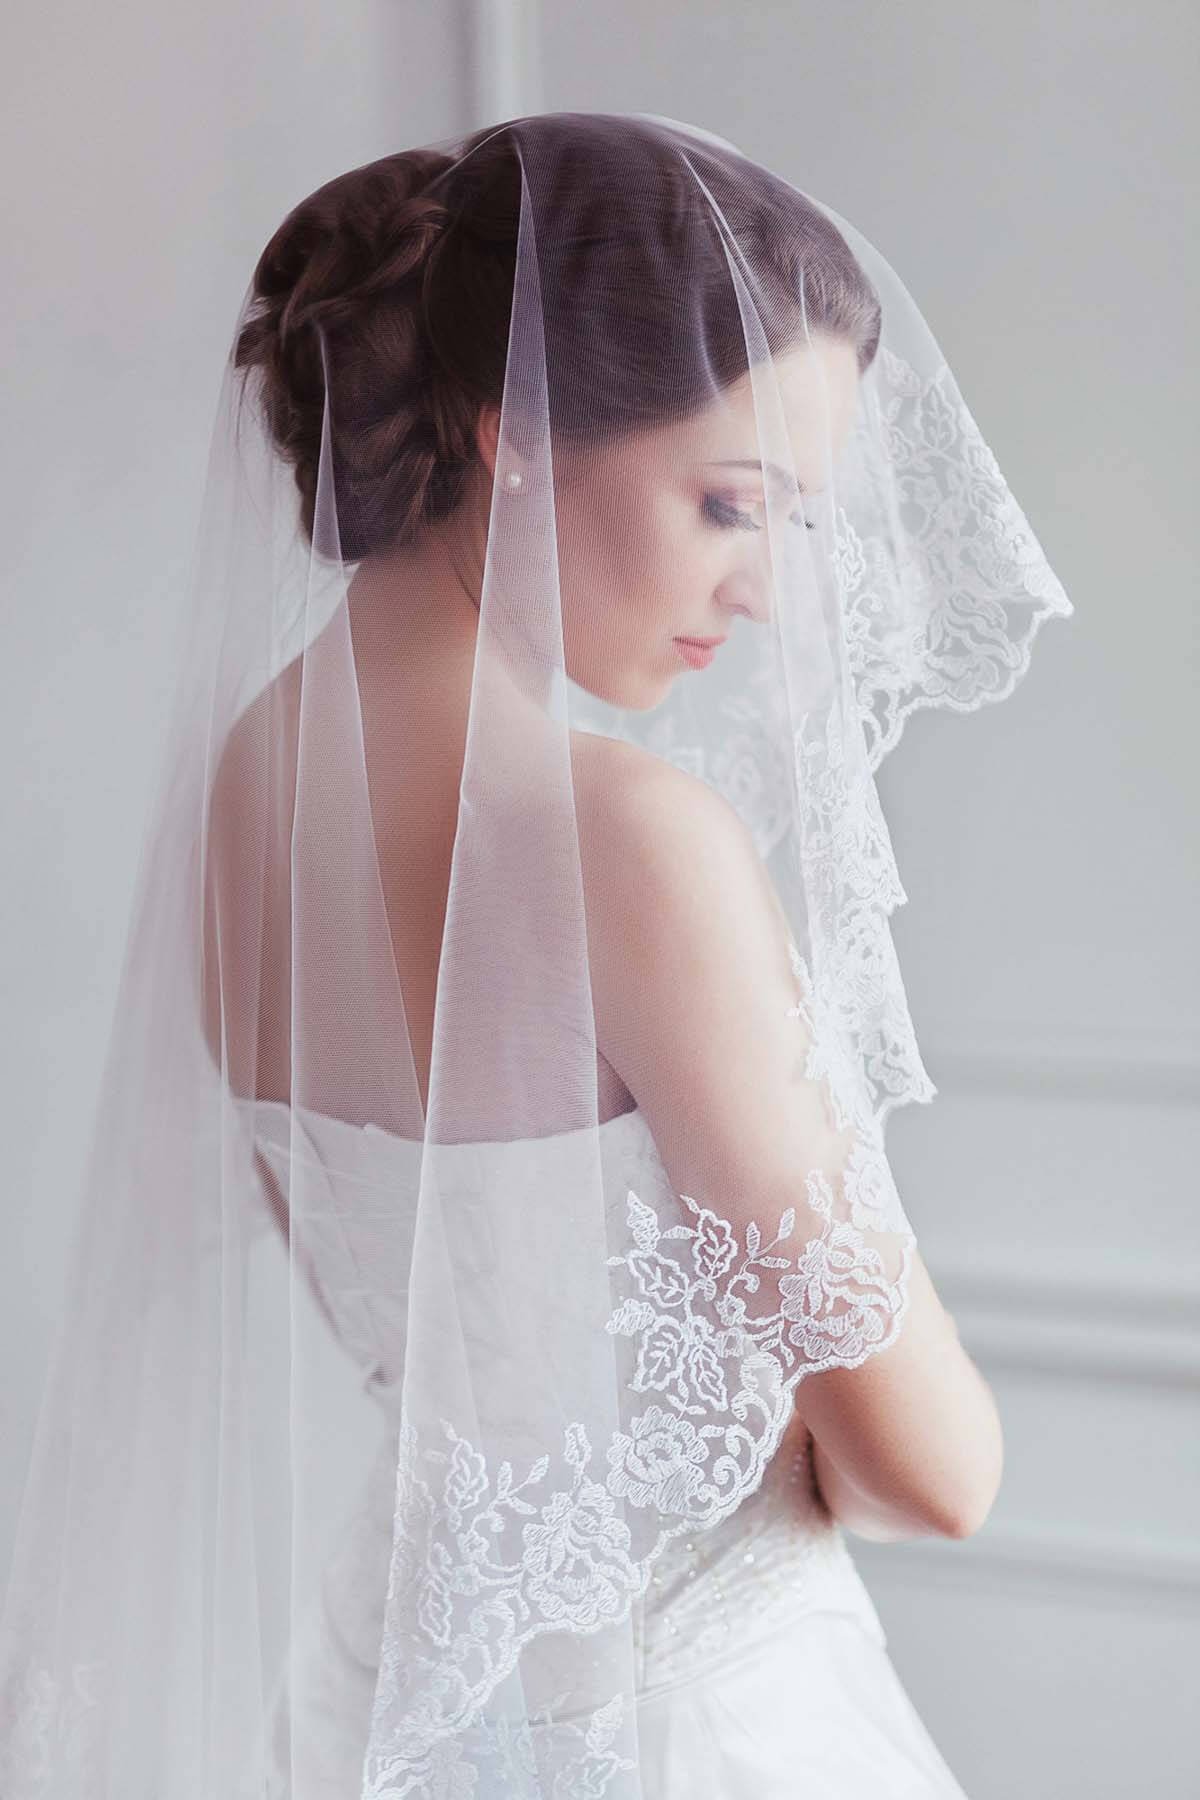 Bridal bun with veil